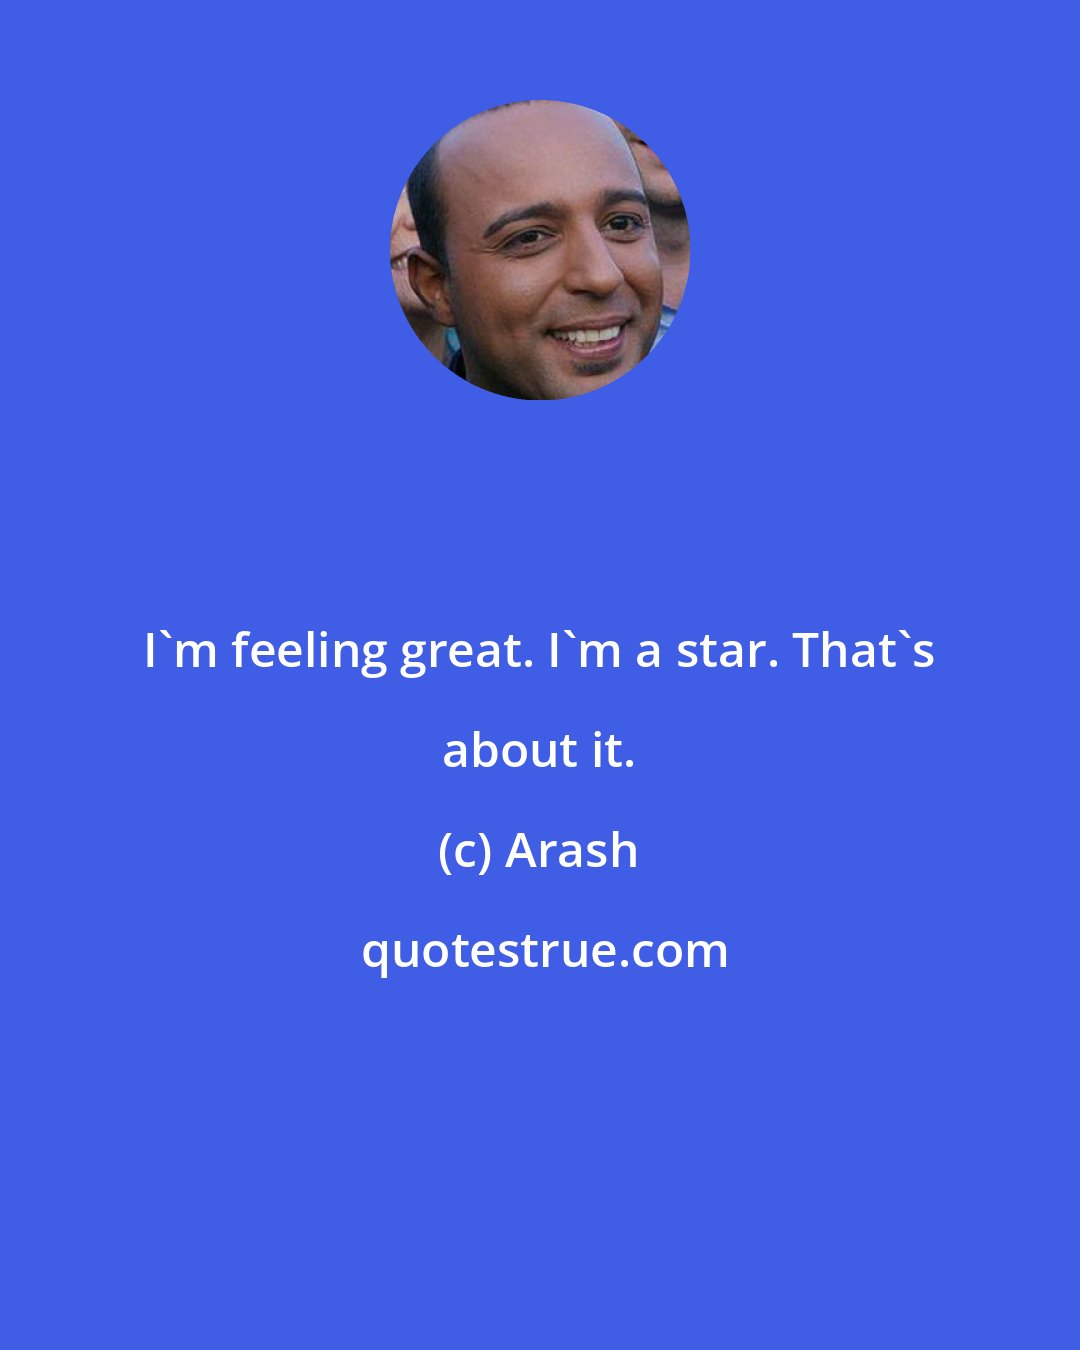 Arash: I'm feeling great. I'm a star. That's about it.